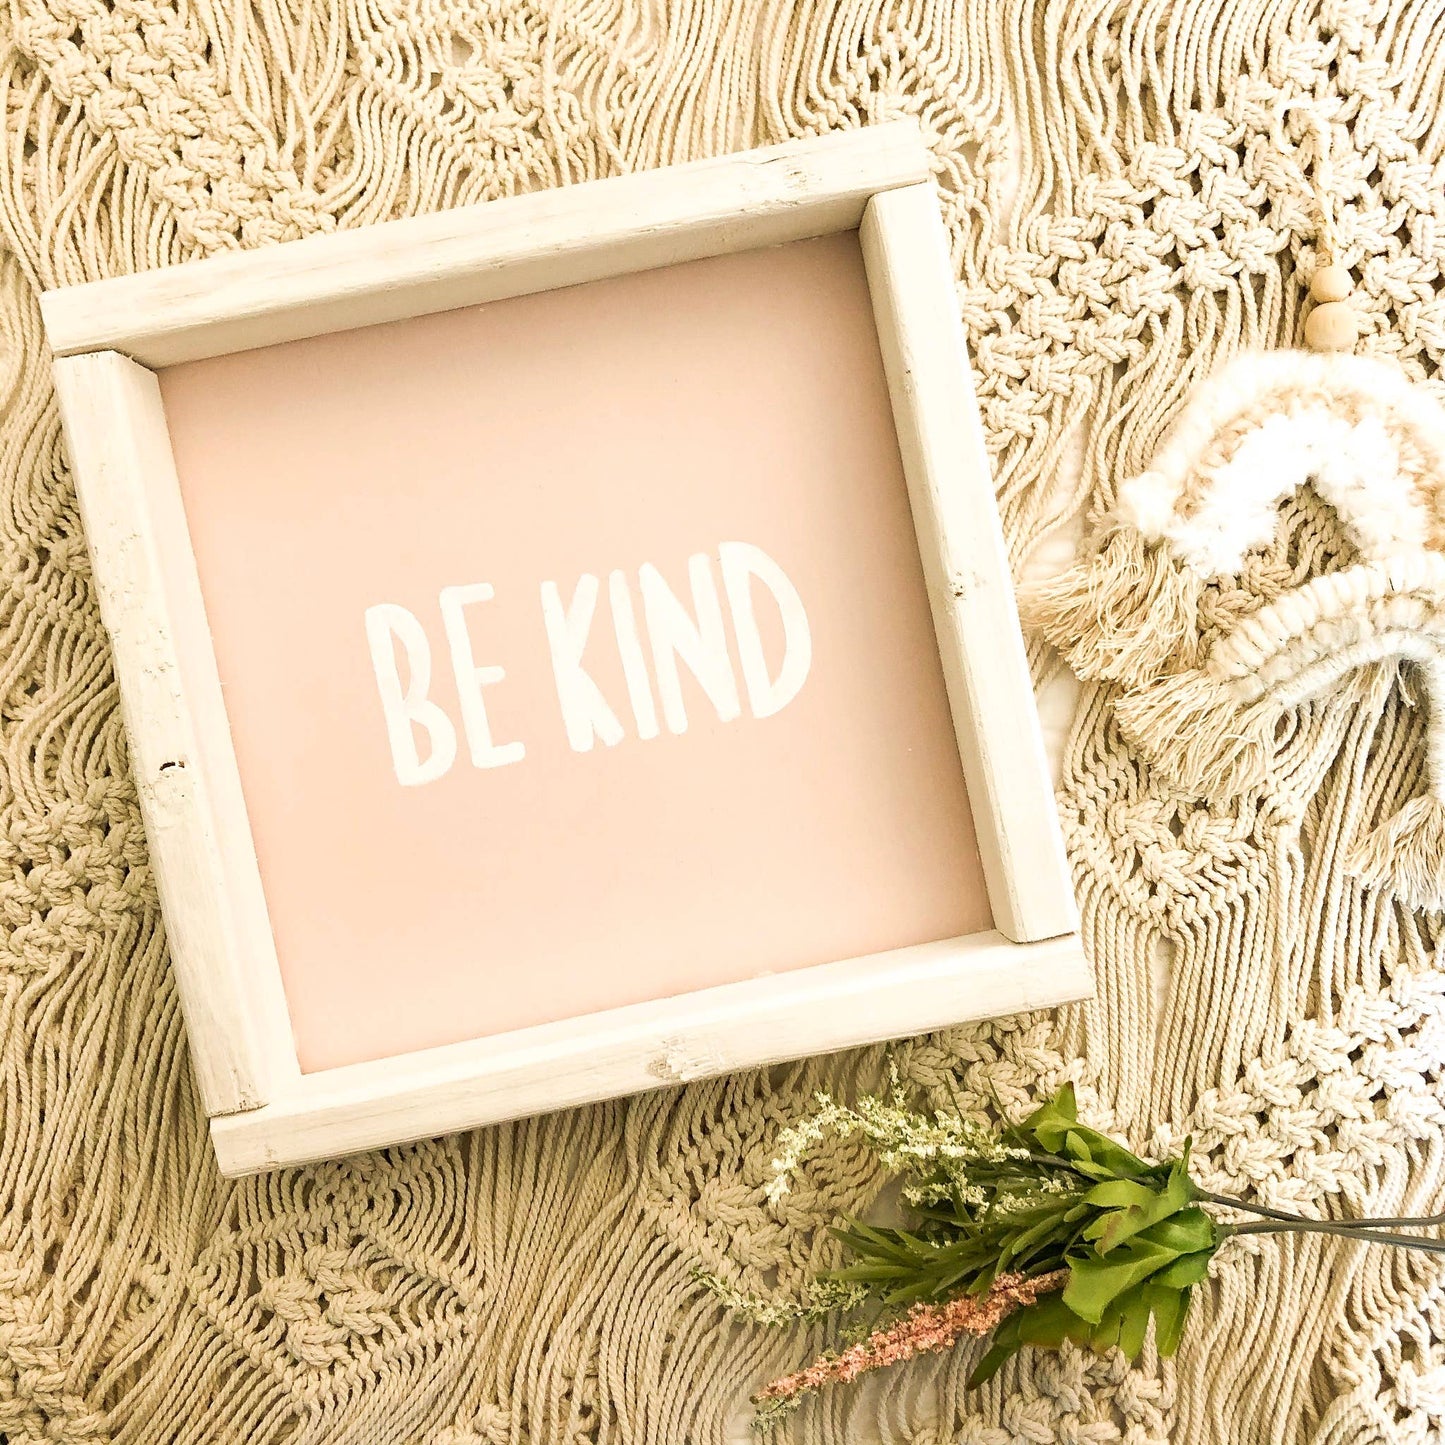 Be Kind Wooden Sign-Pink